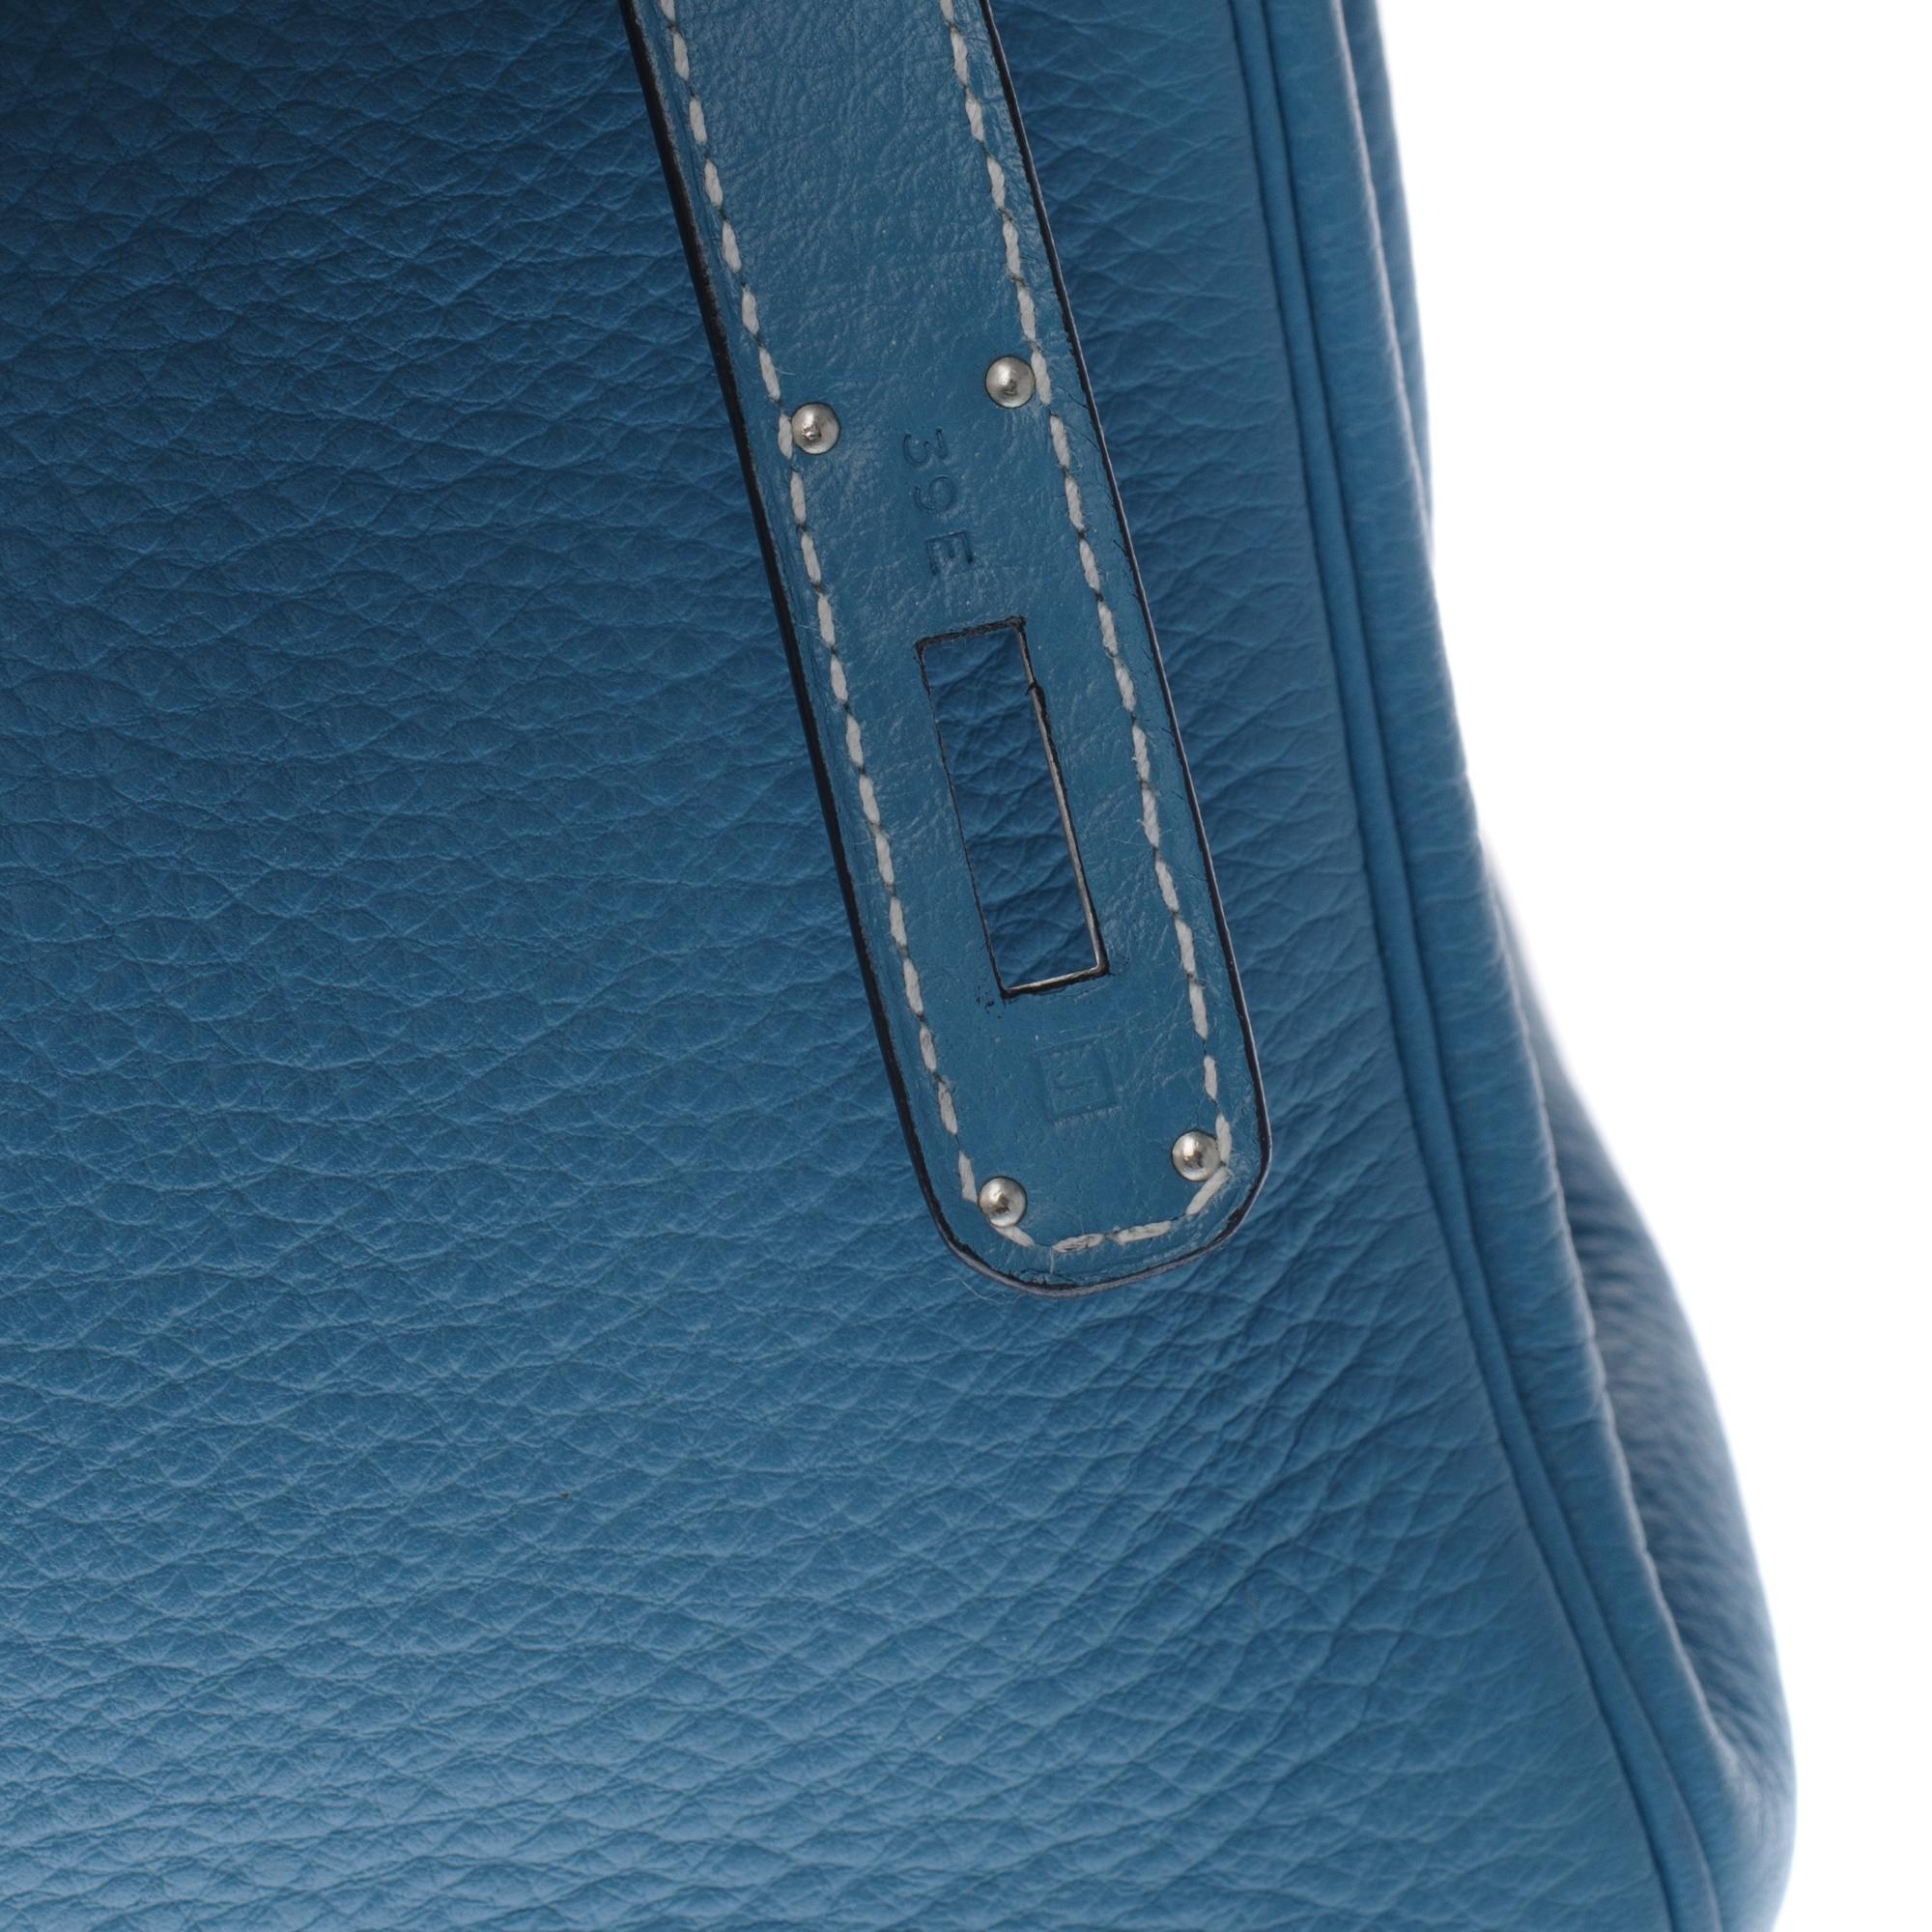 Hermès Birkin 30 handbag in Togo blue jean leather, PHW 1